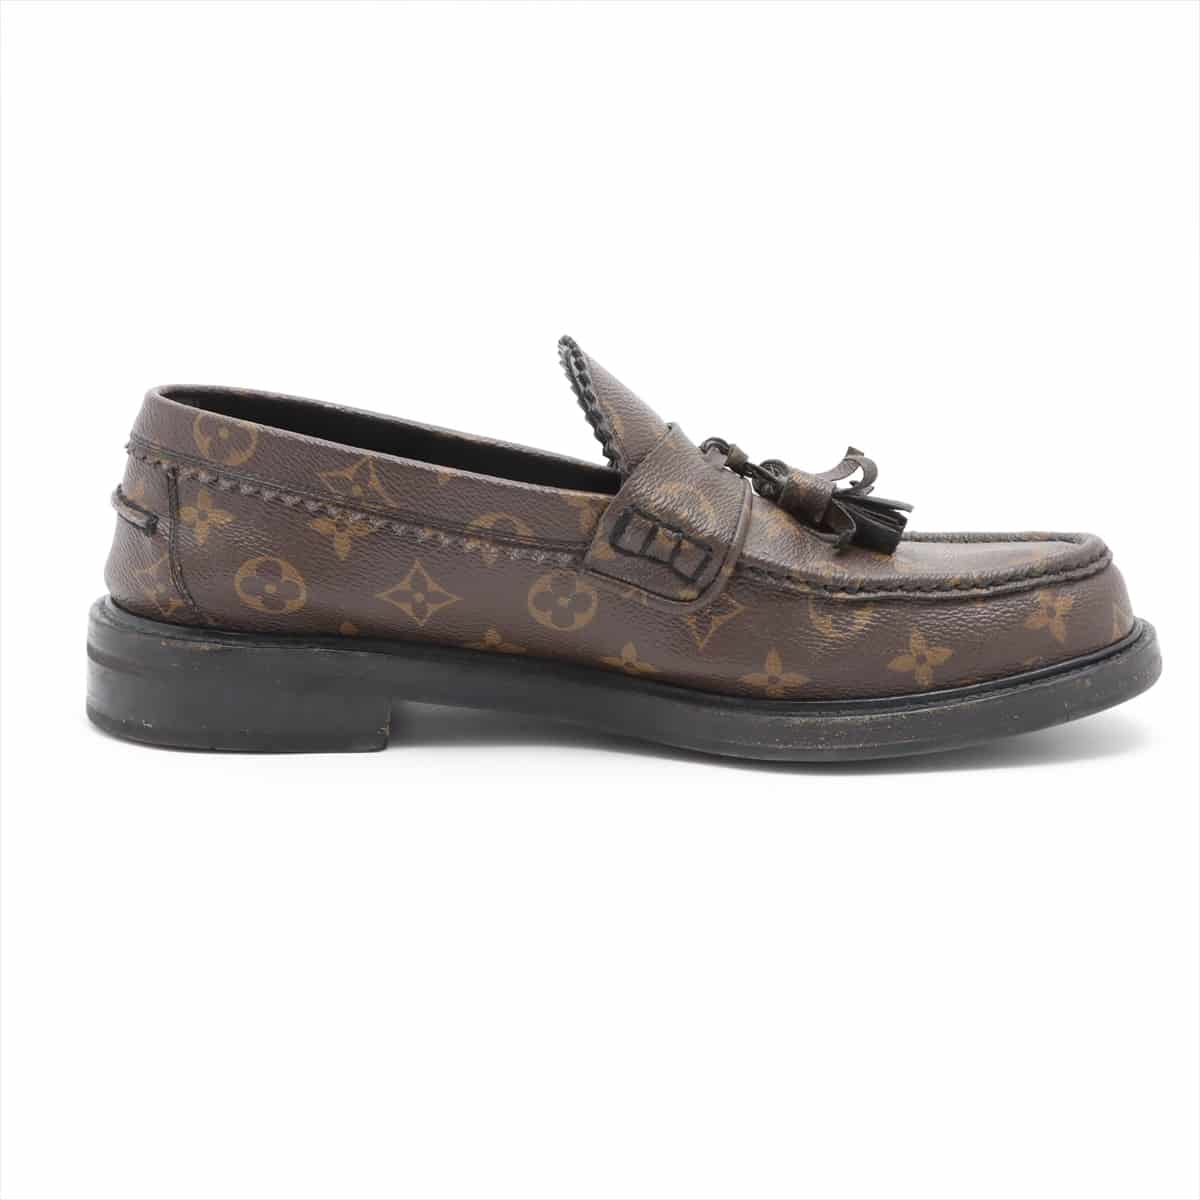 Louis Vuitton x NIGO 20 years Leather Loafer 9M Men's Brown BM0230 tassel loafers